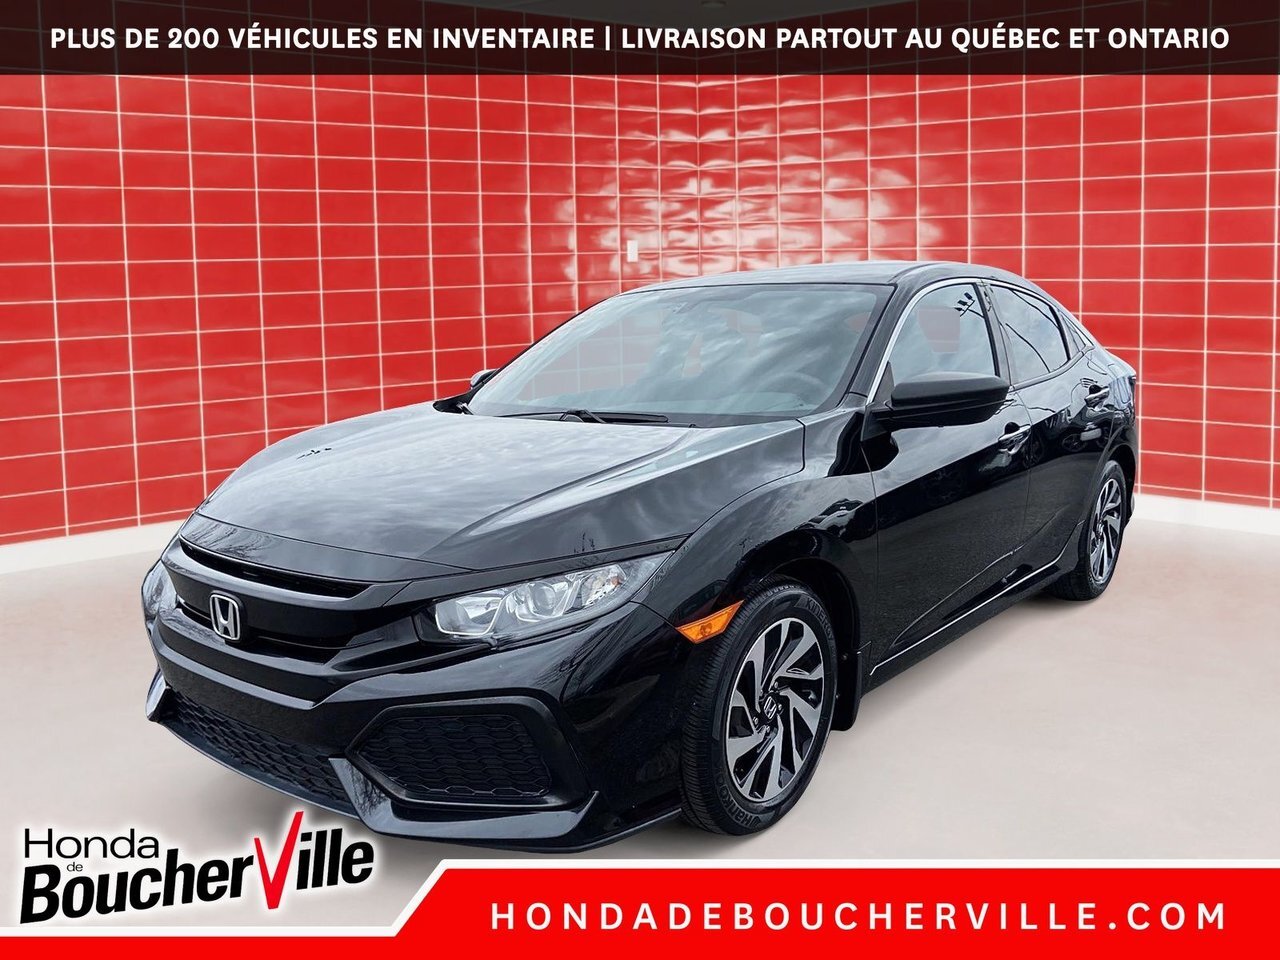 2017 Honda Civic Hatchback LX BAS KILOMETRAGE, AUTOMATIQUE, TURBO